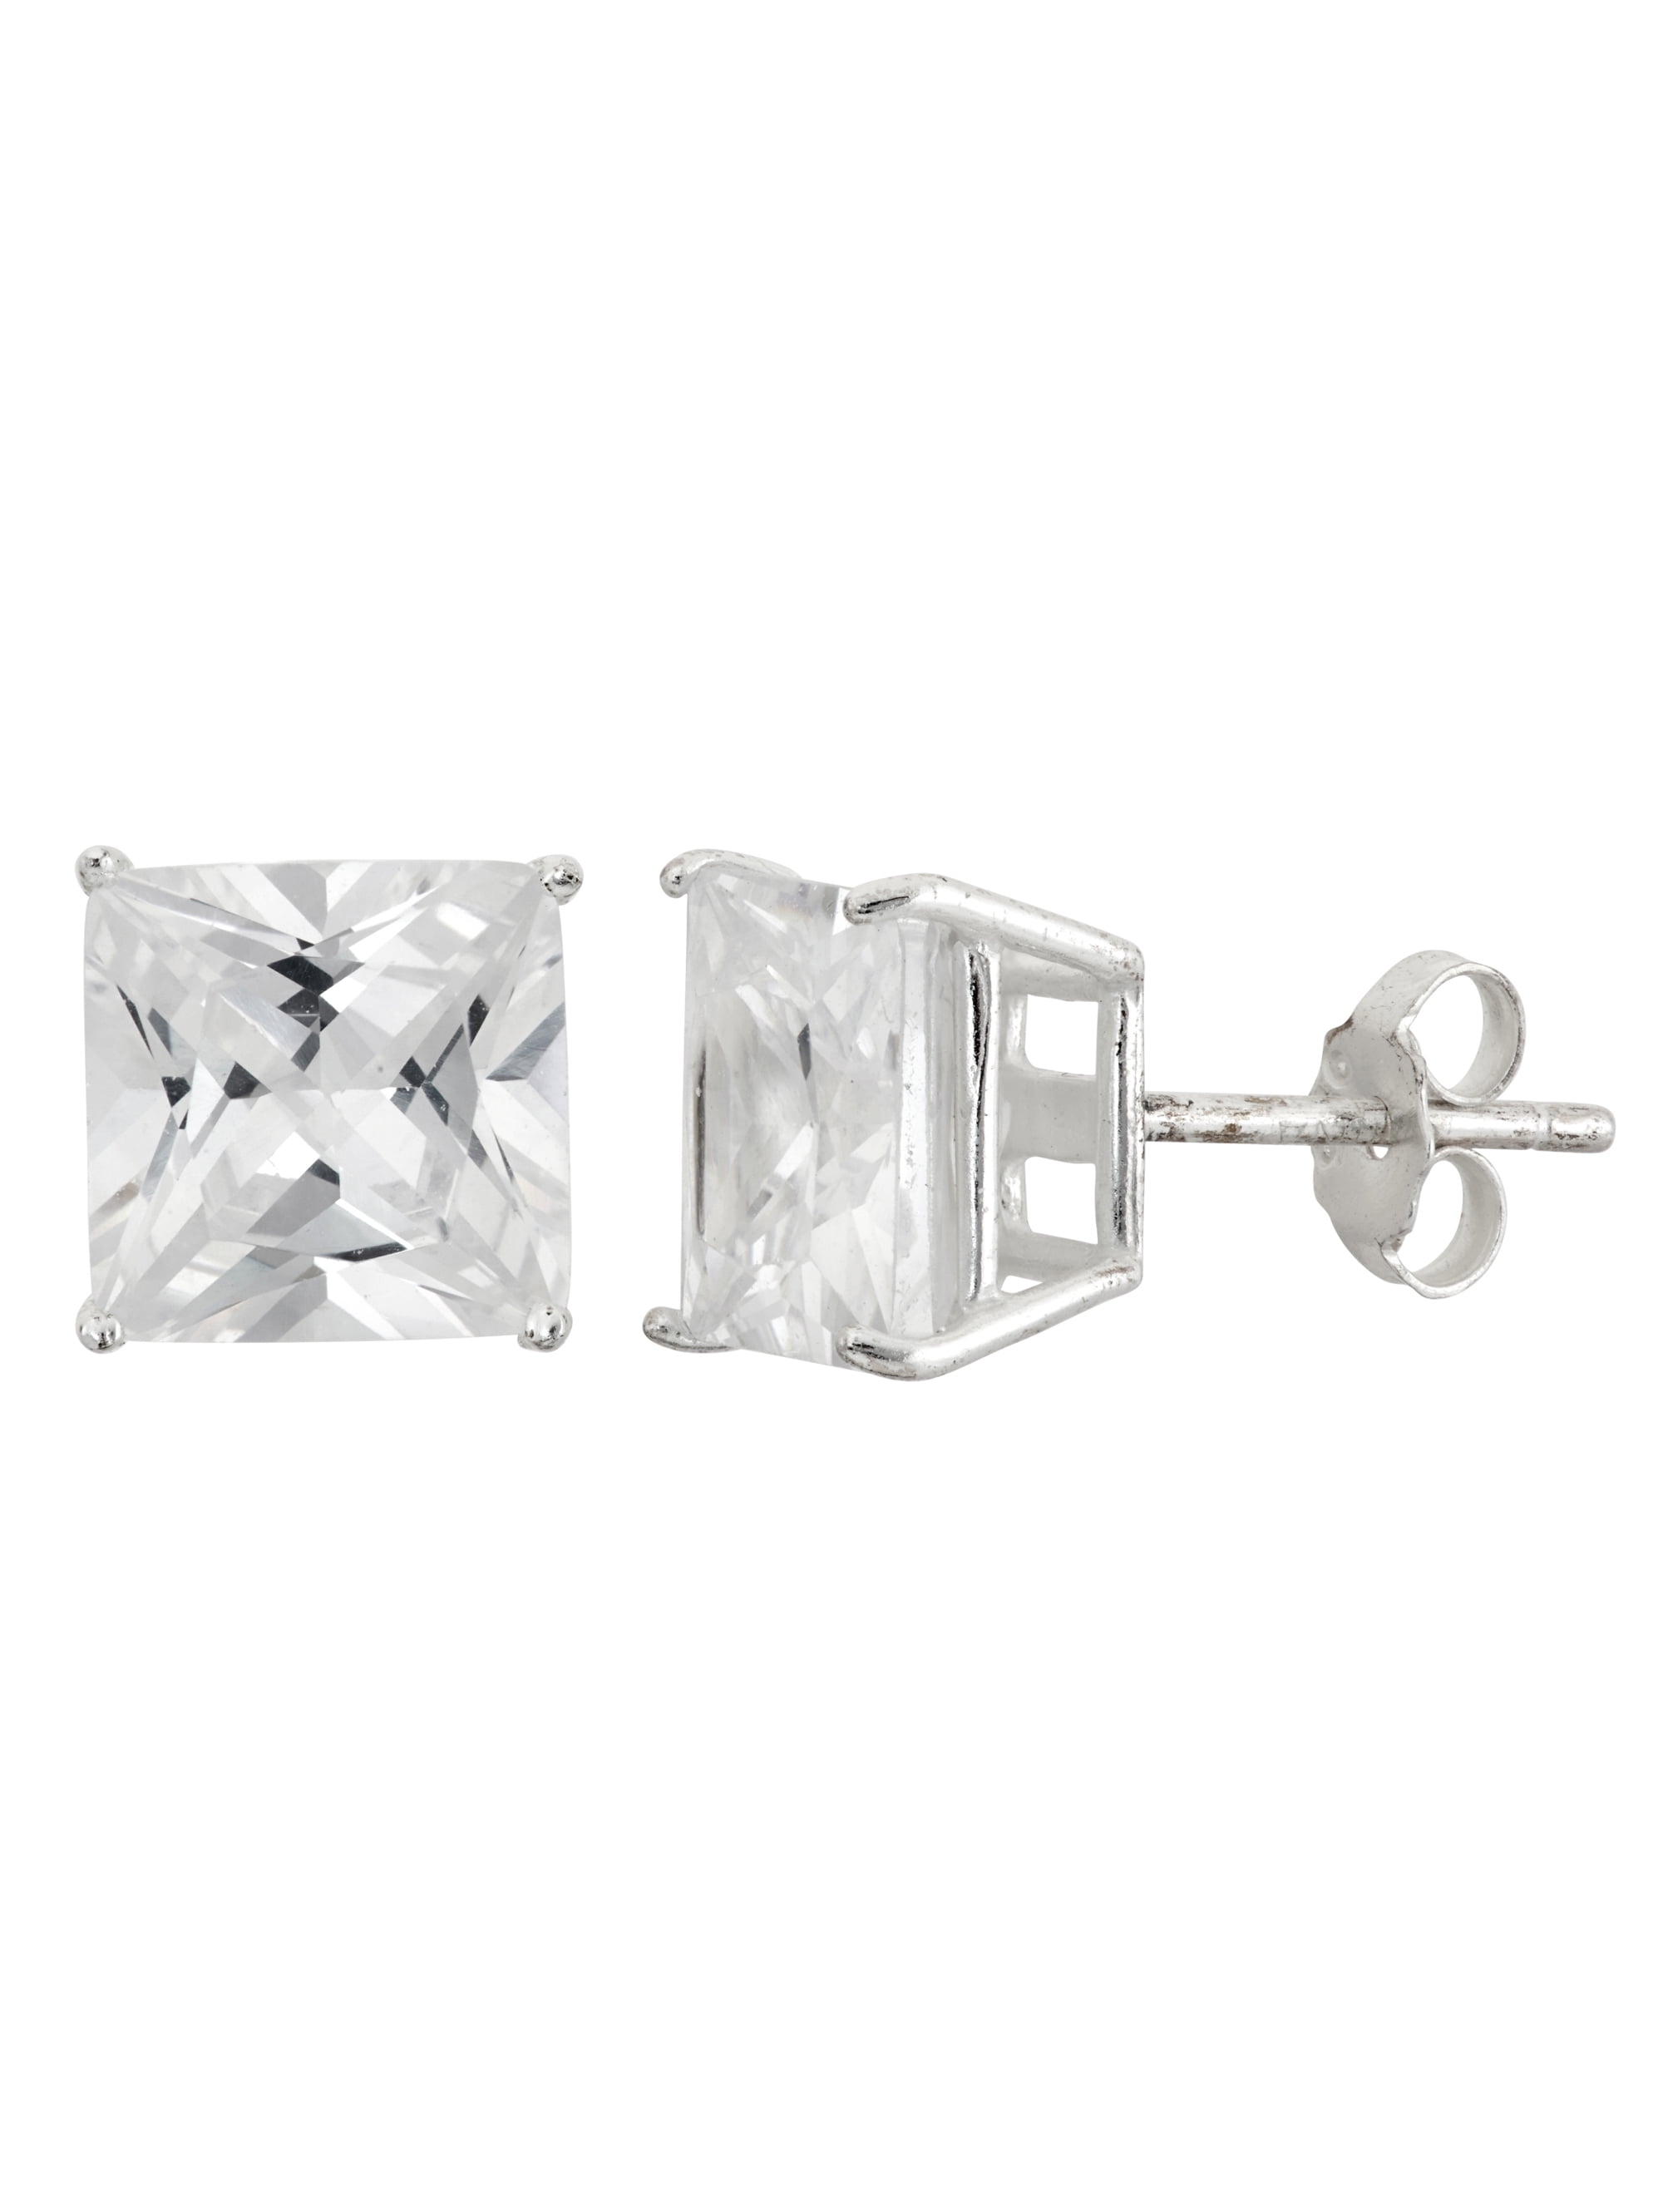 Sterling silver square cut cz stud earrings